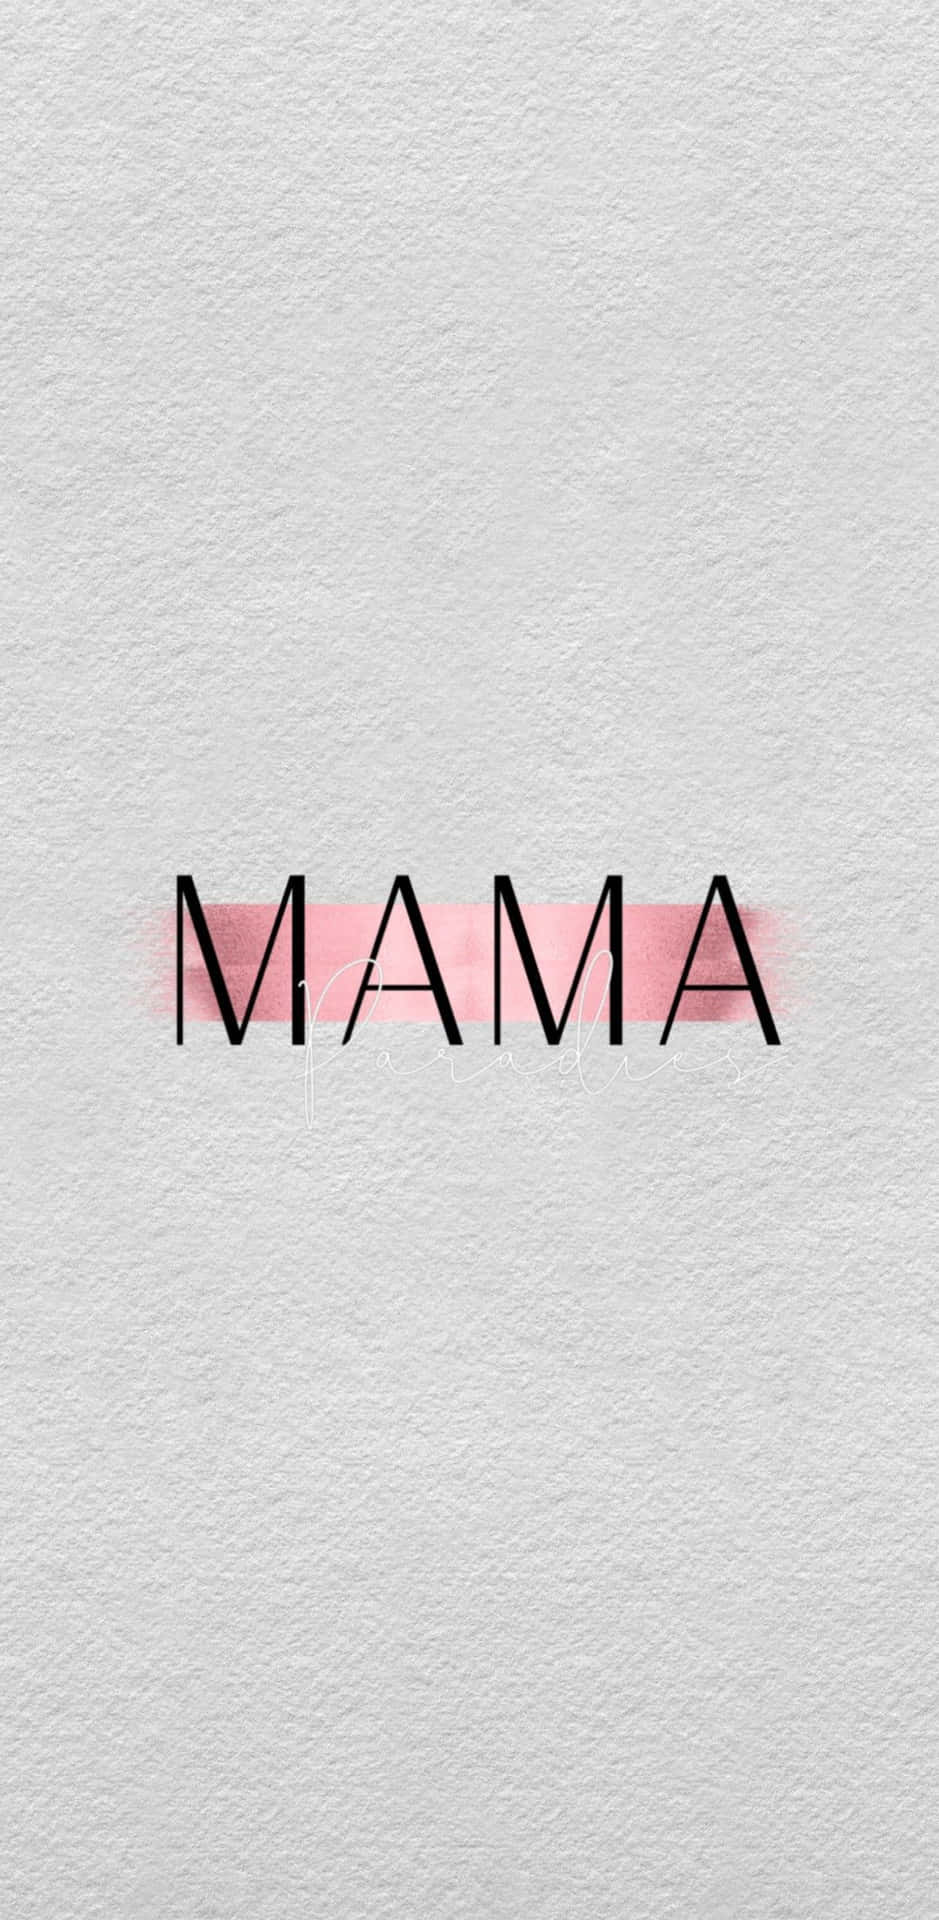 Mama Text Artwork Wallpaper